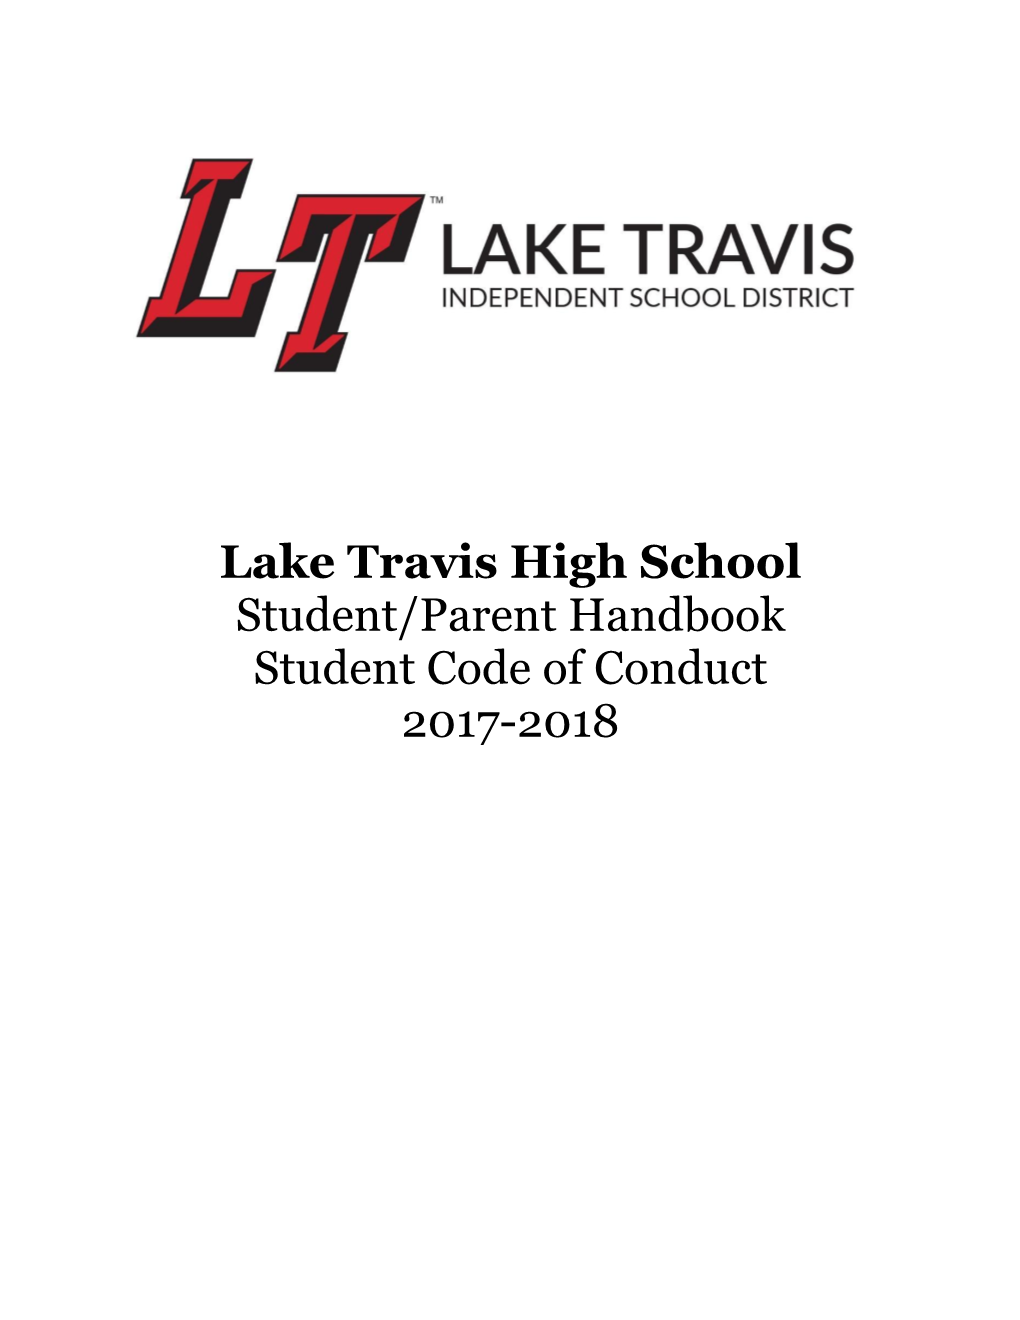 Lake Travis High School Student/Parent Handbook Student Code of Conduct 2017-2018